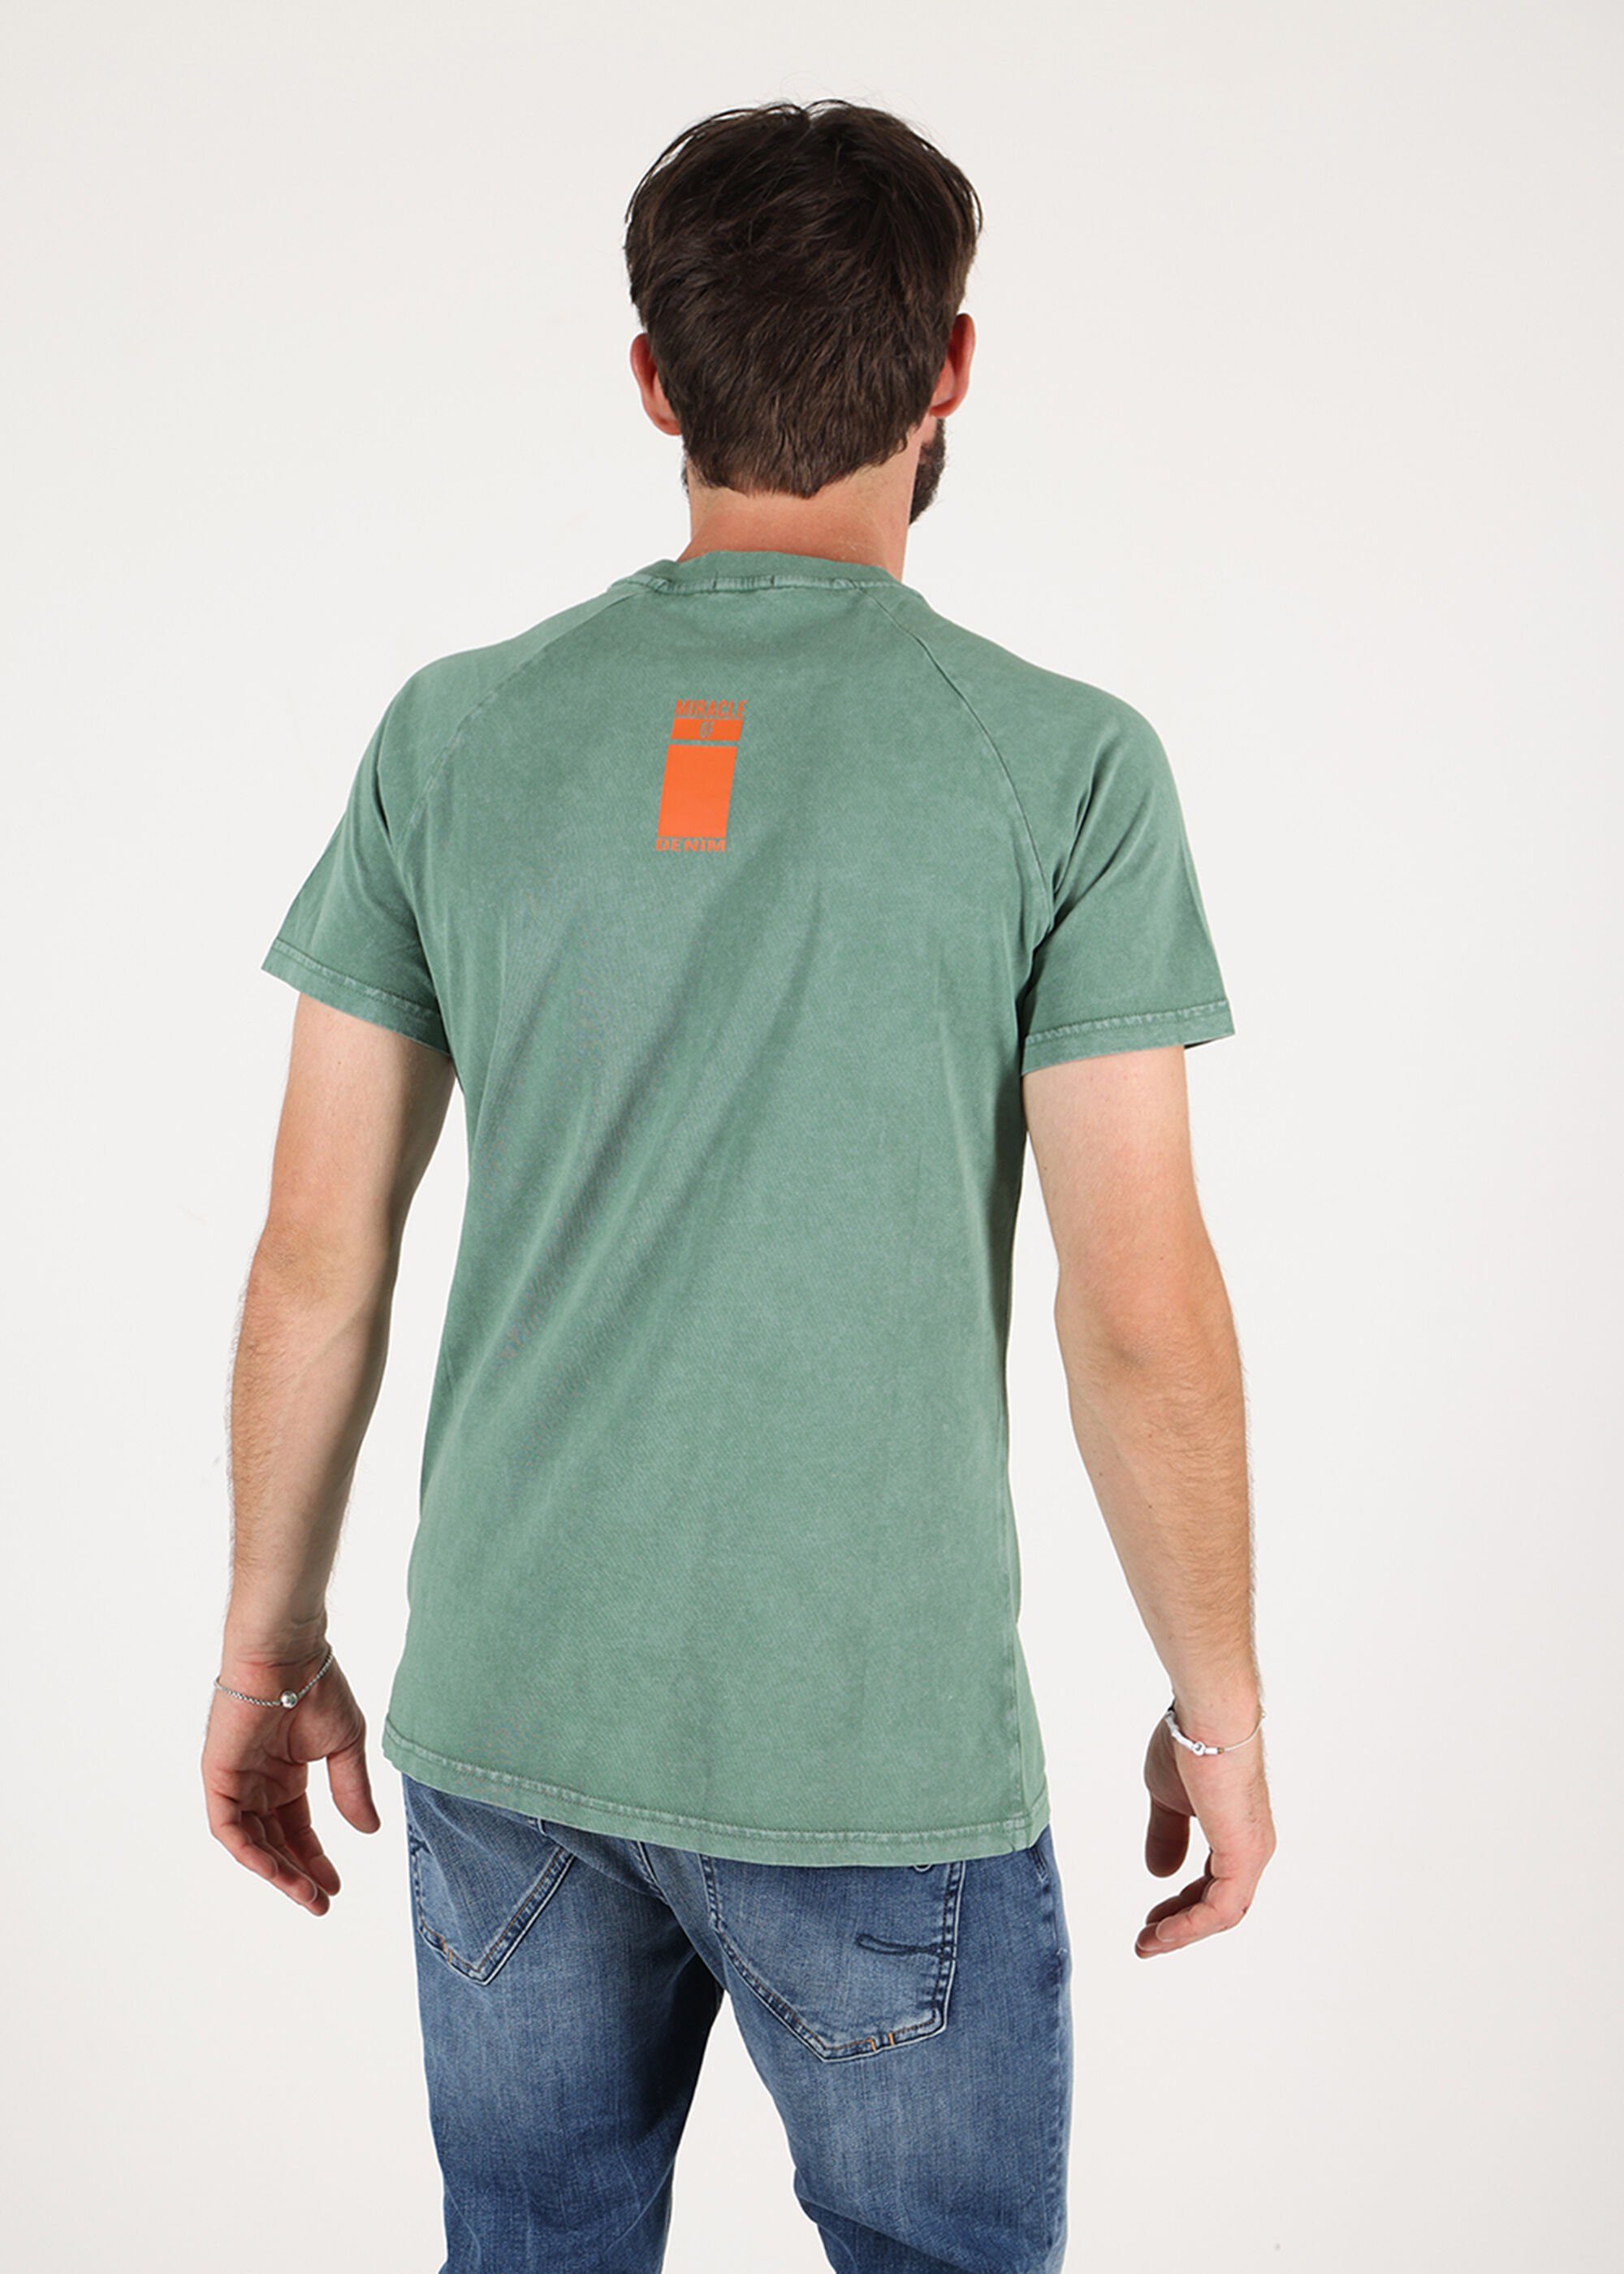 T-Shirt Froggy Denim of unifarbenen Design Green Miracle im